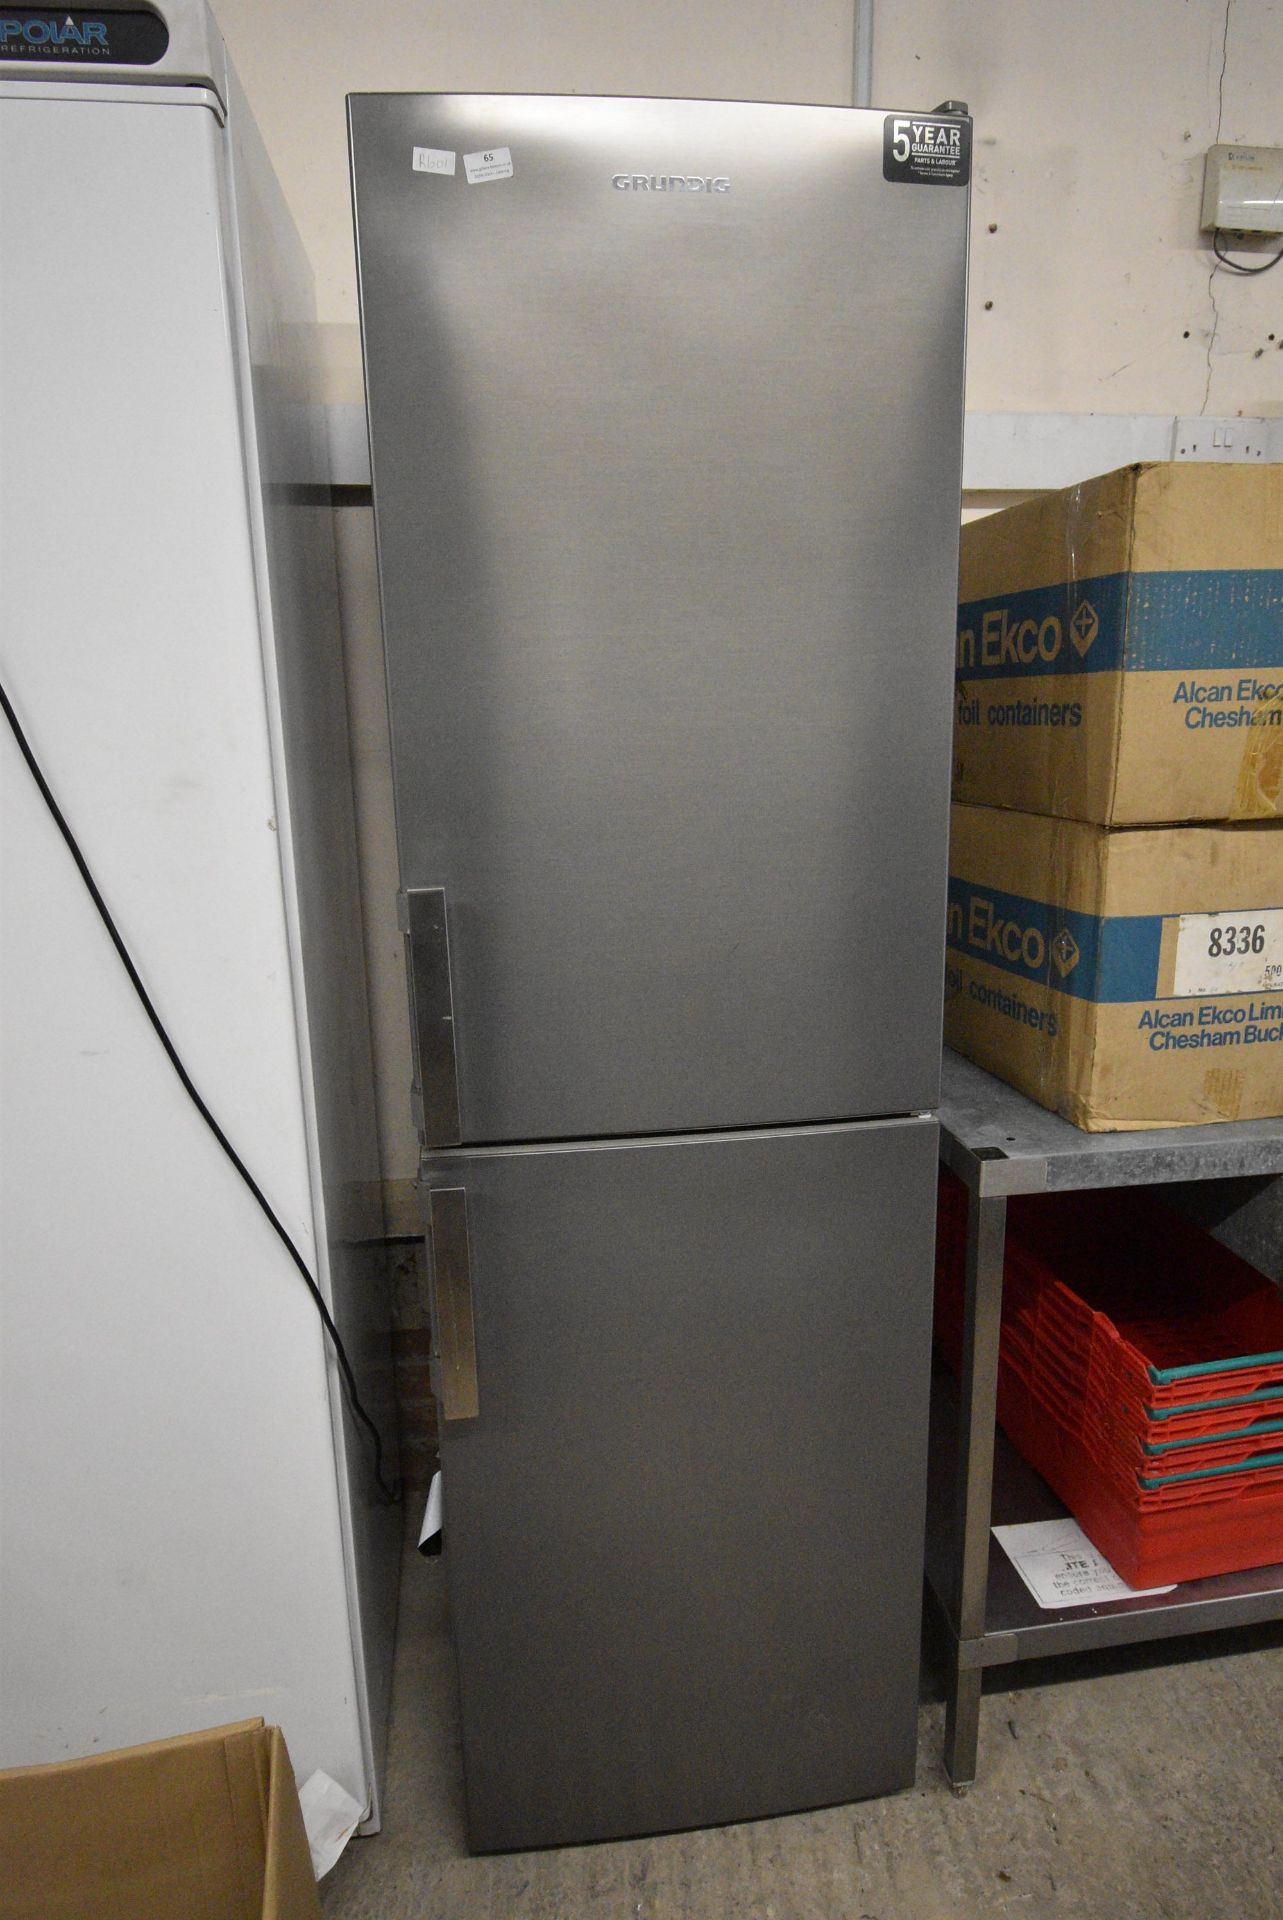 Grundig GKF15810N Upright Refrigerator